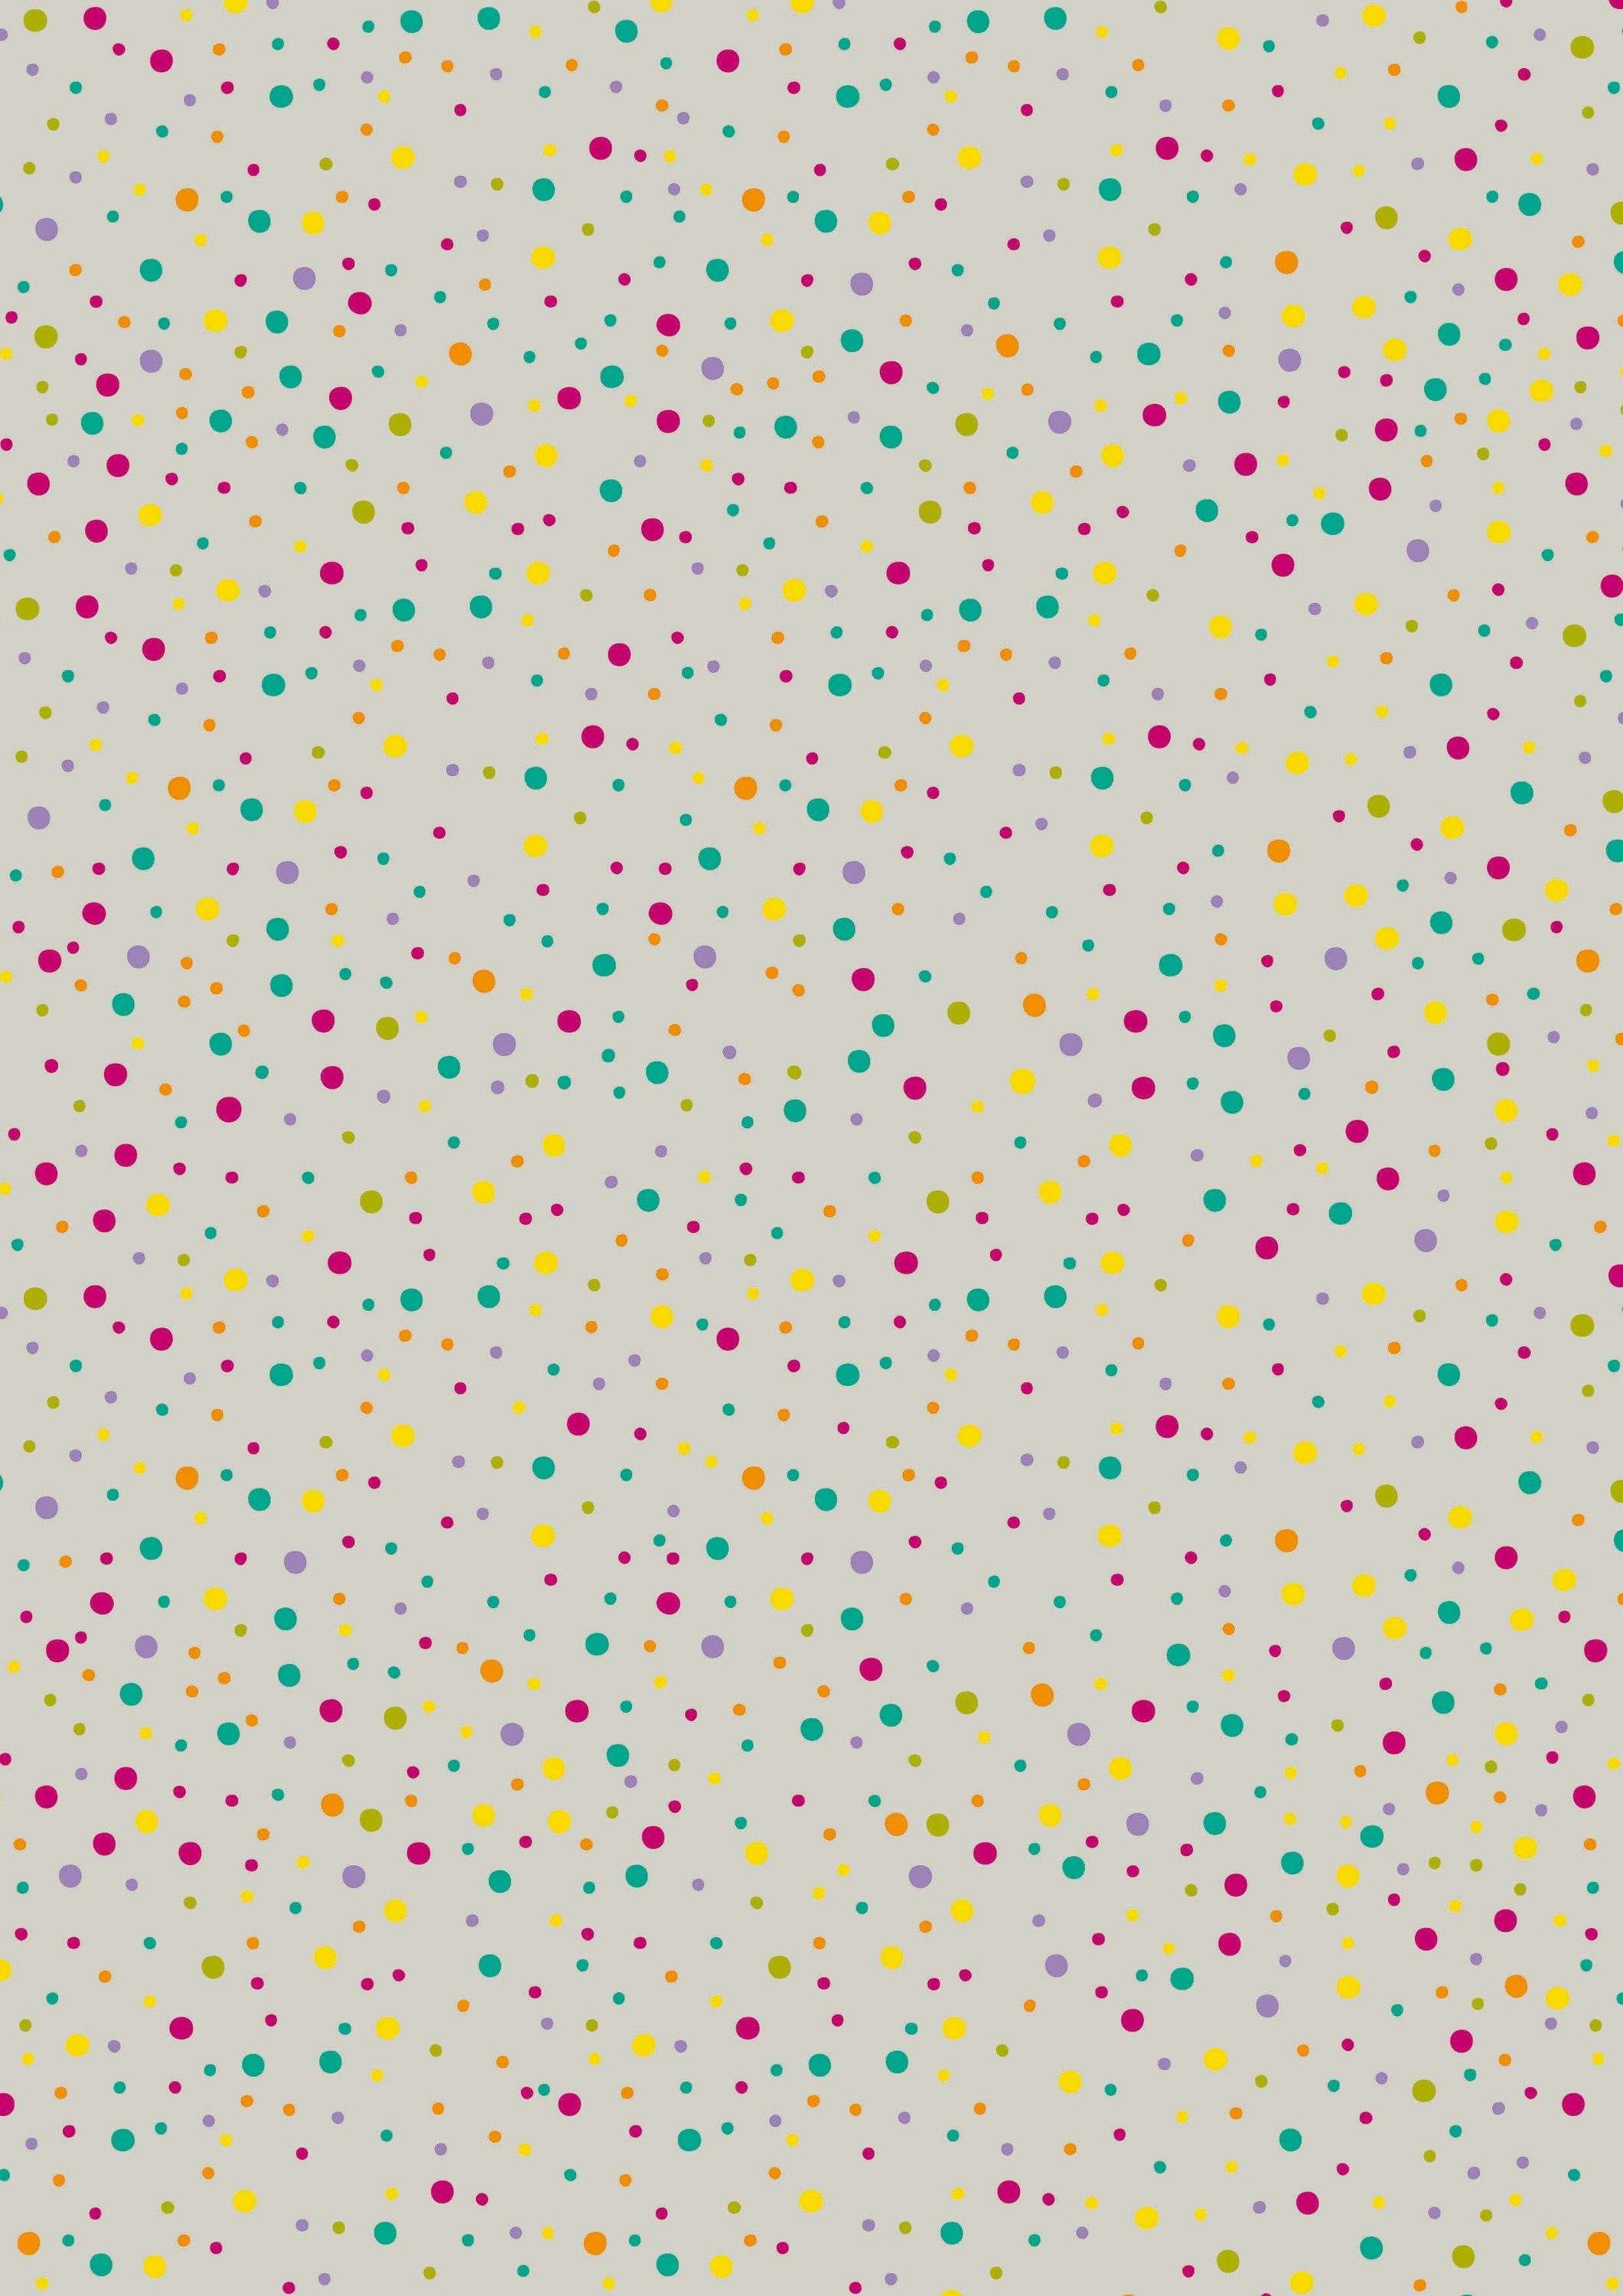 MarpaJansen Motivpapier Regenbogen Punkte, 50 cm x 70 cm